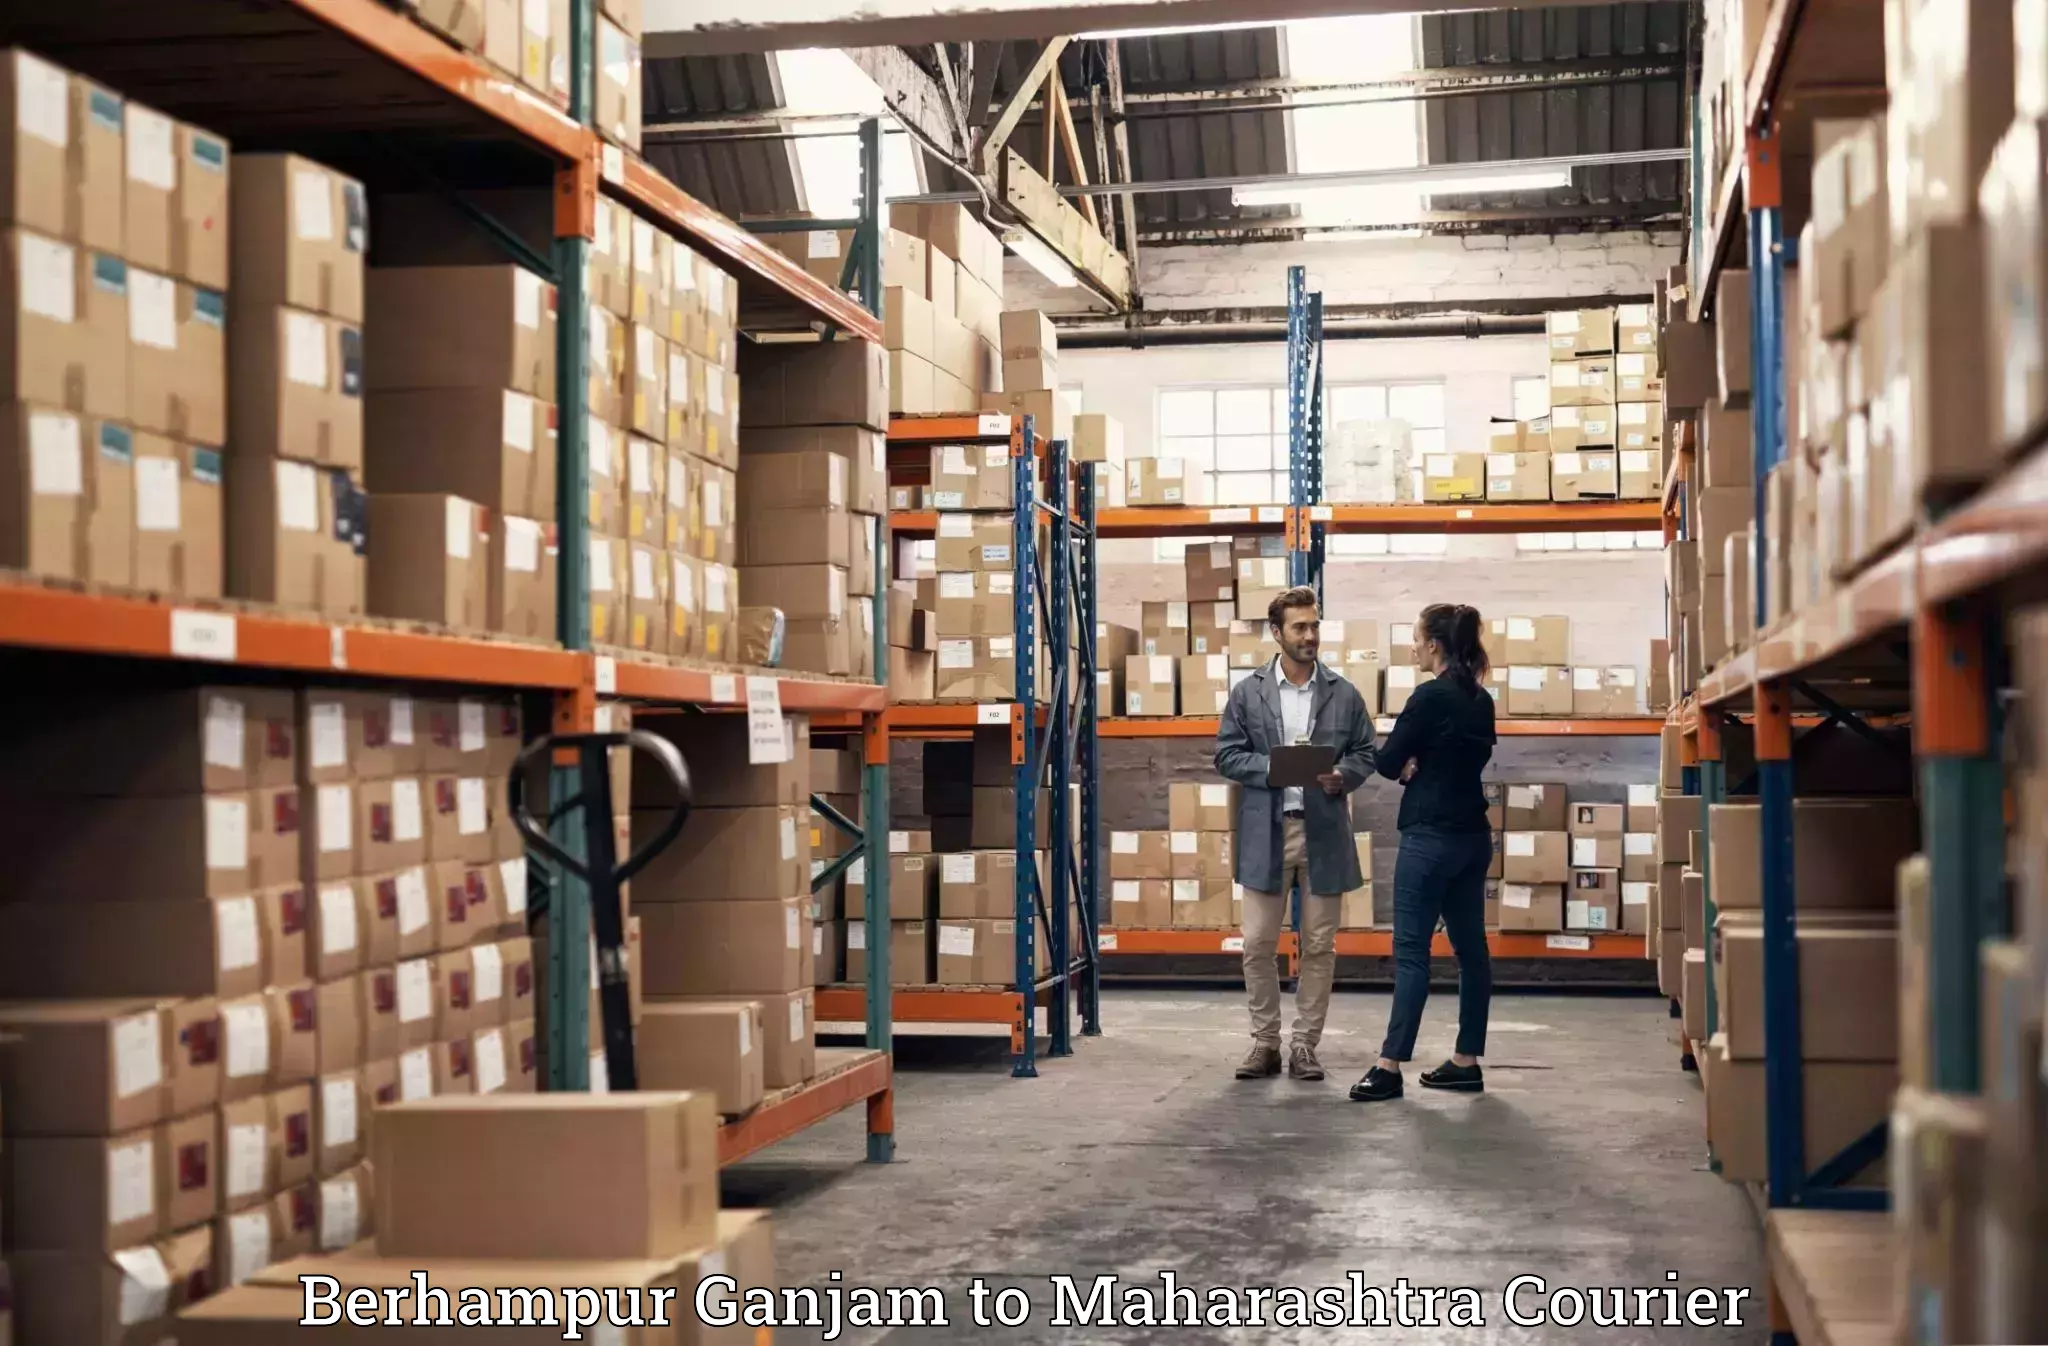 Furniture delivery service Berhampur Ganjam to Maharashtra